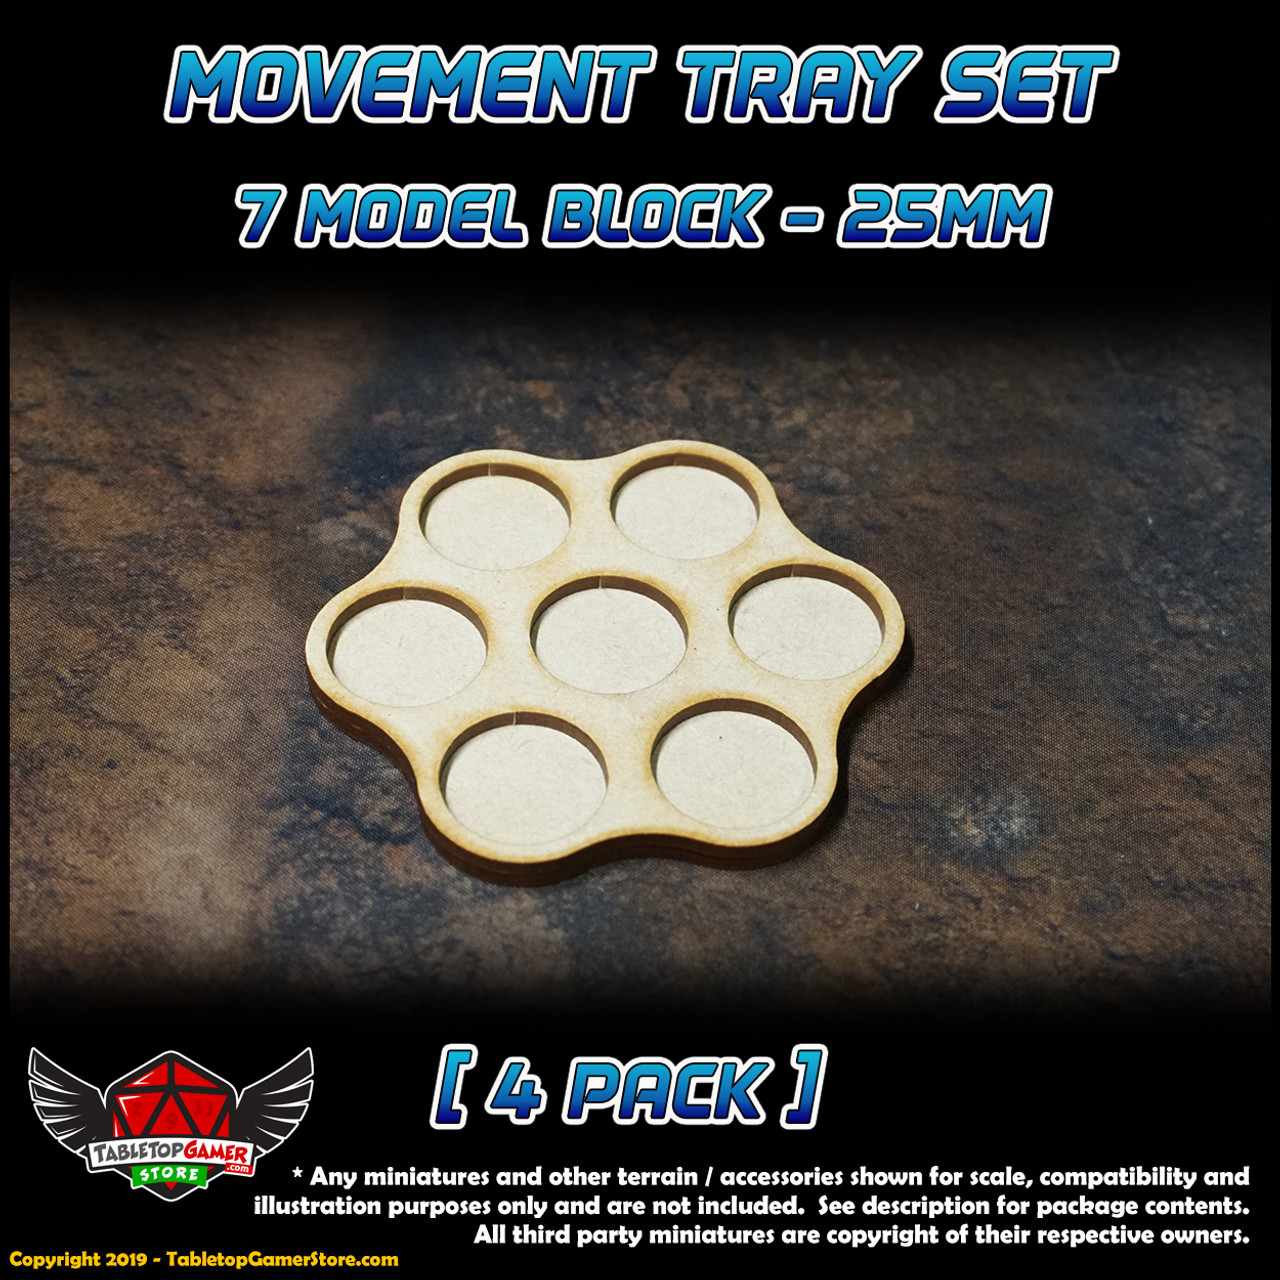 25mm Movement Tray Set - 7 Model Block - 4 Pack